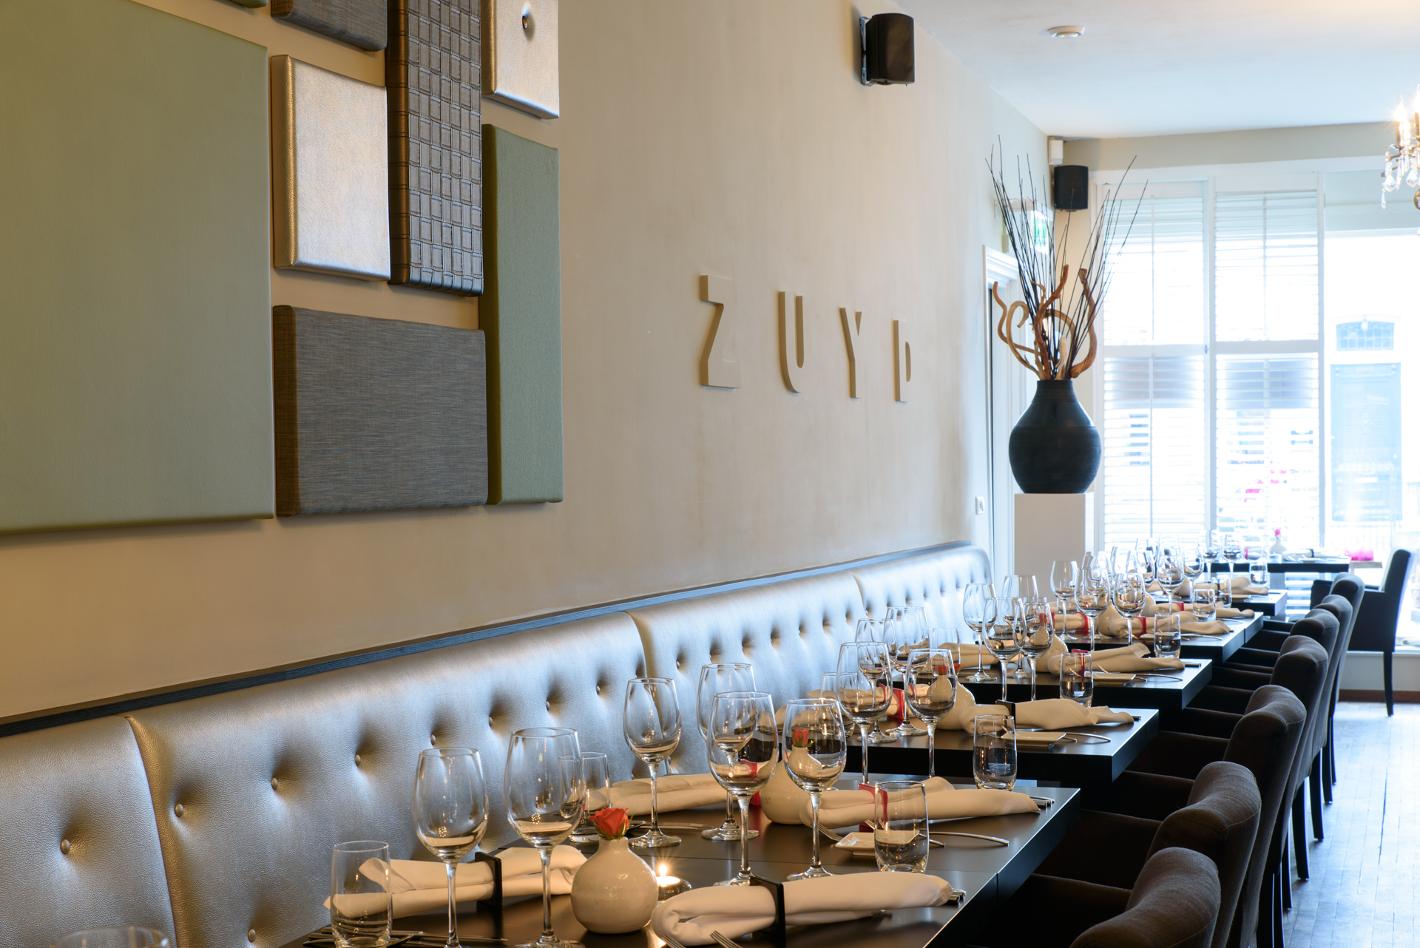 Foto Restaurant Zuyd in Breda, Eten & drinken, Lunchen, Dineren - #1